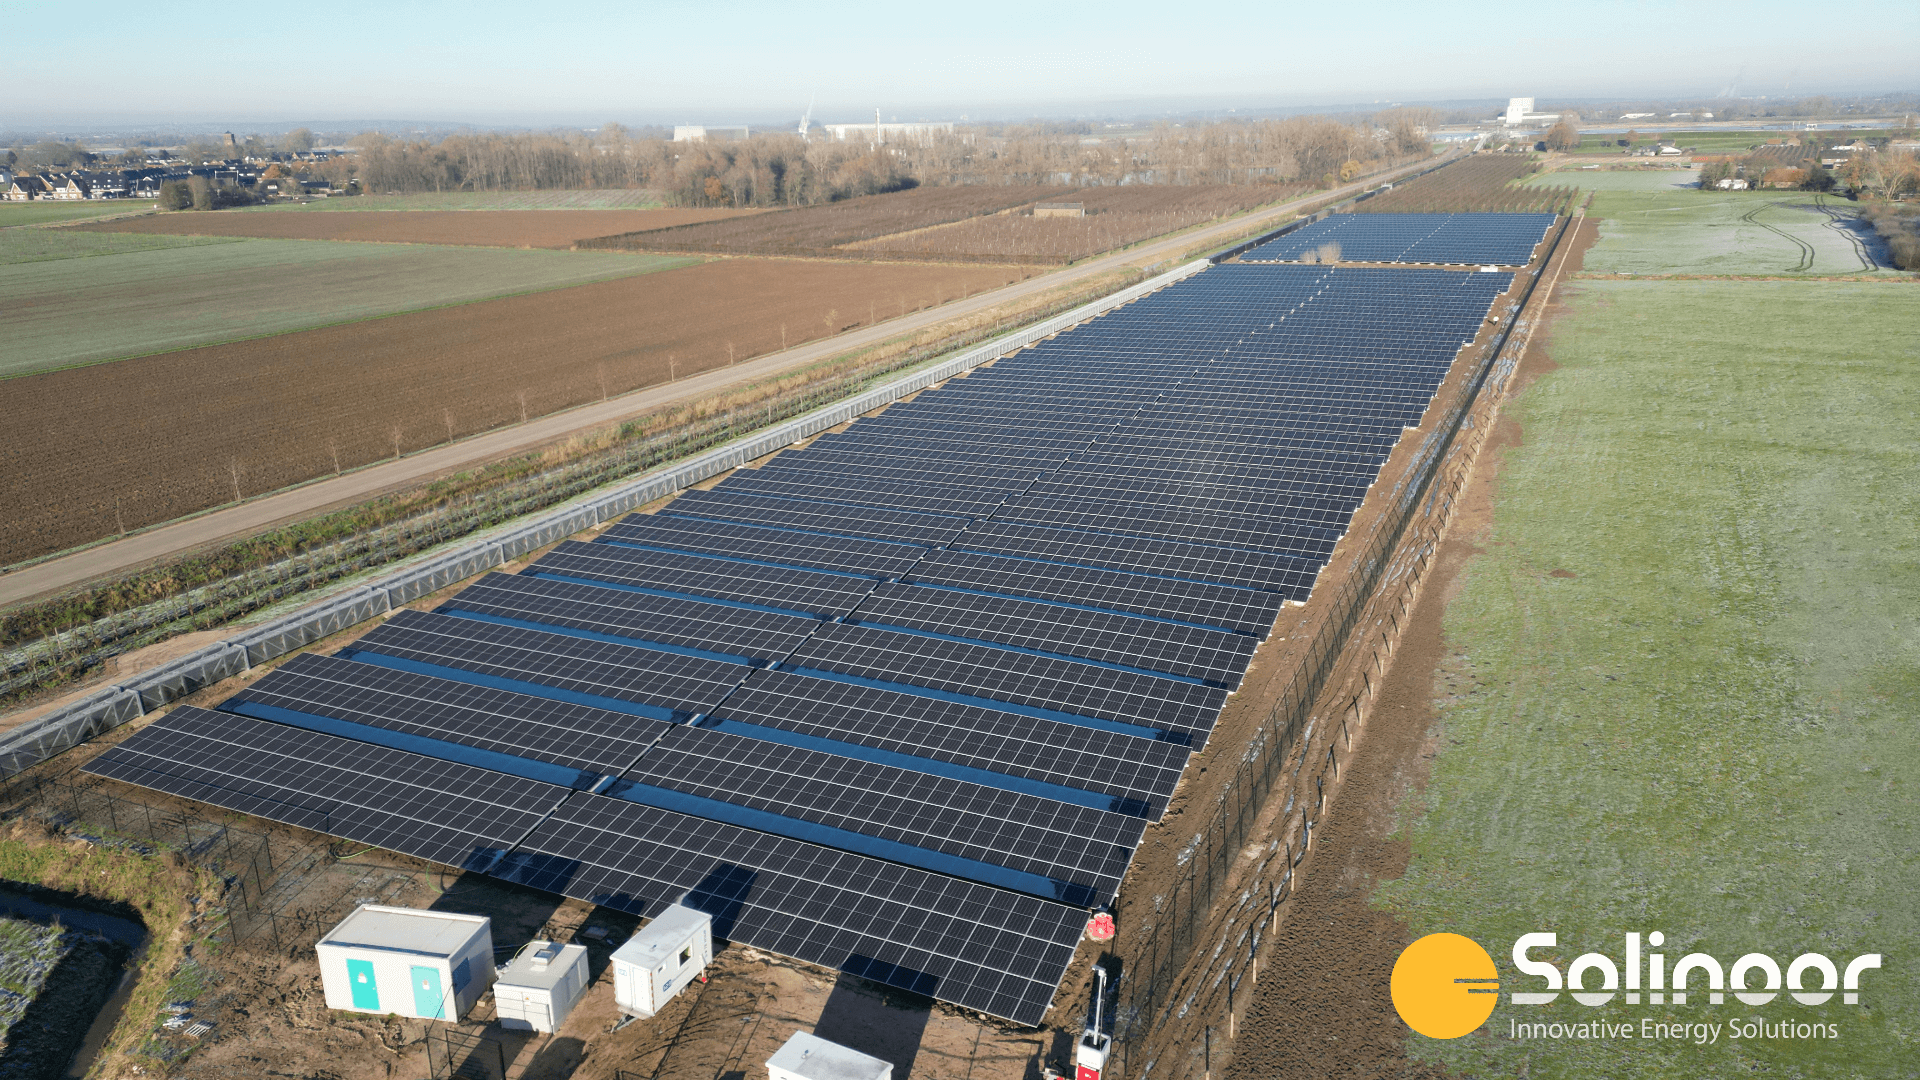 Solarpark Geertjesgolf operational installation - Winssen Deest, the Netherlands